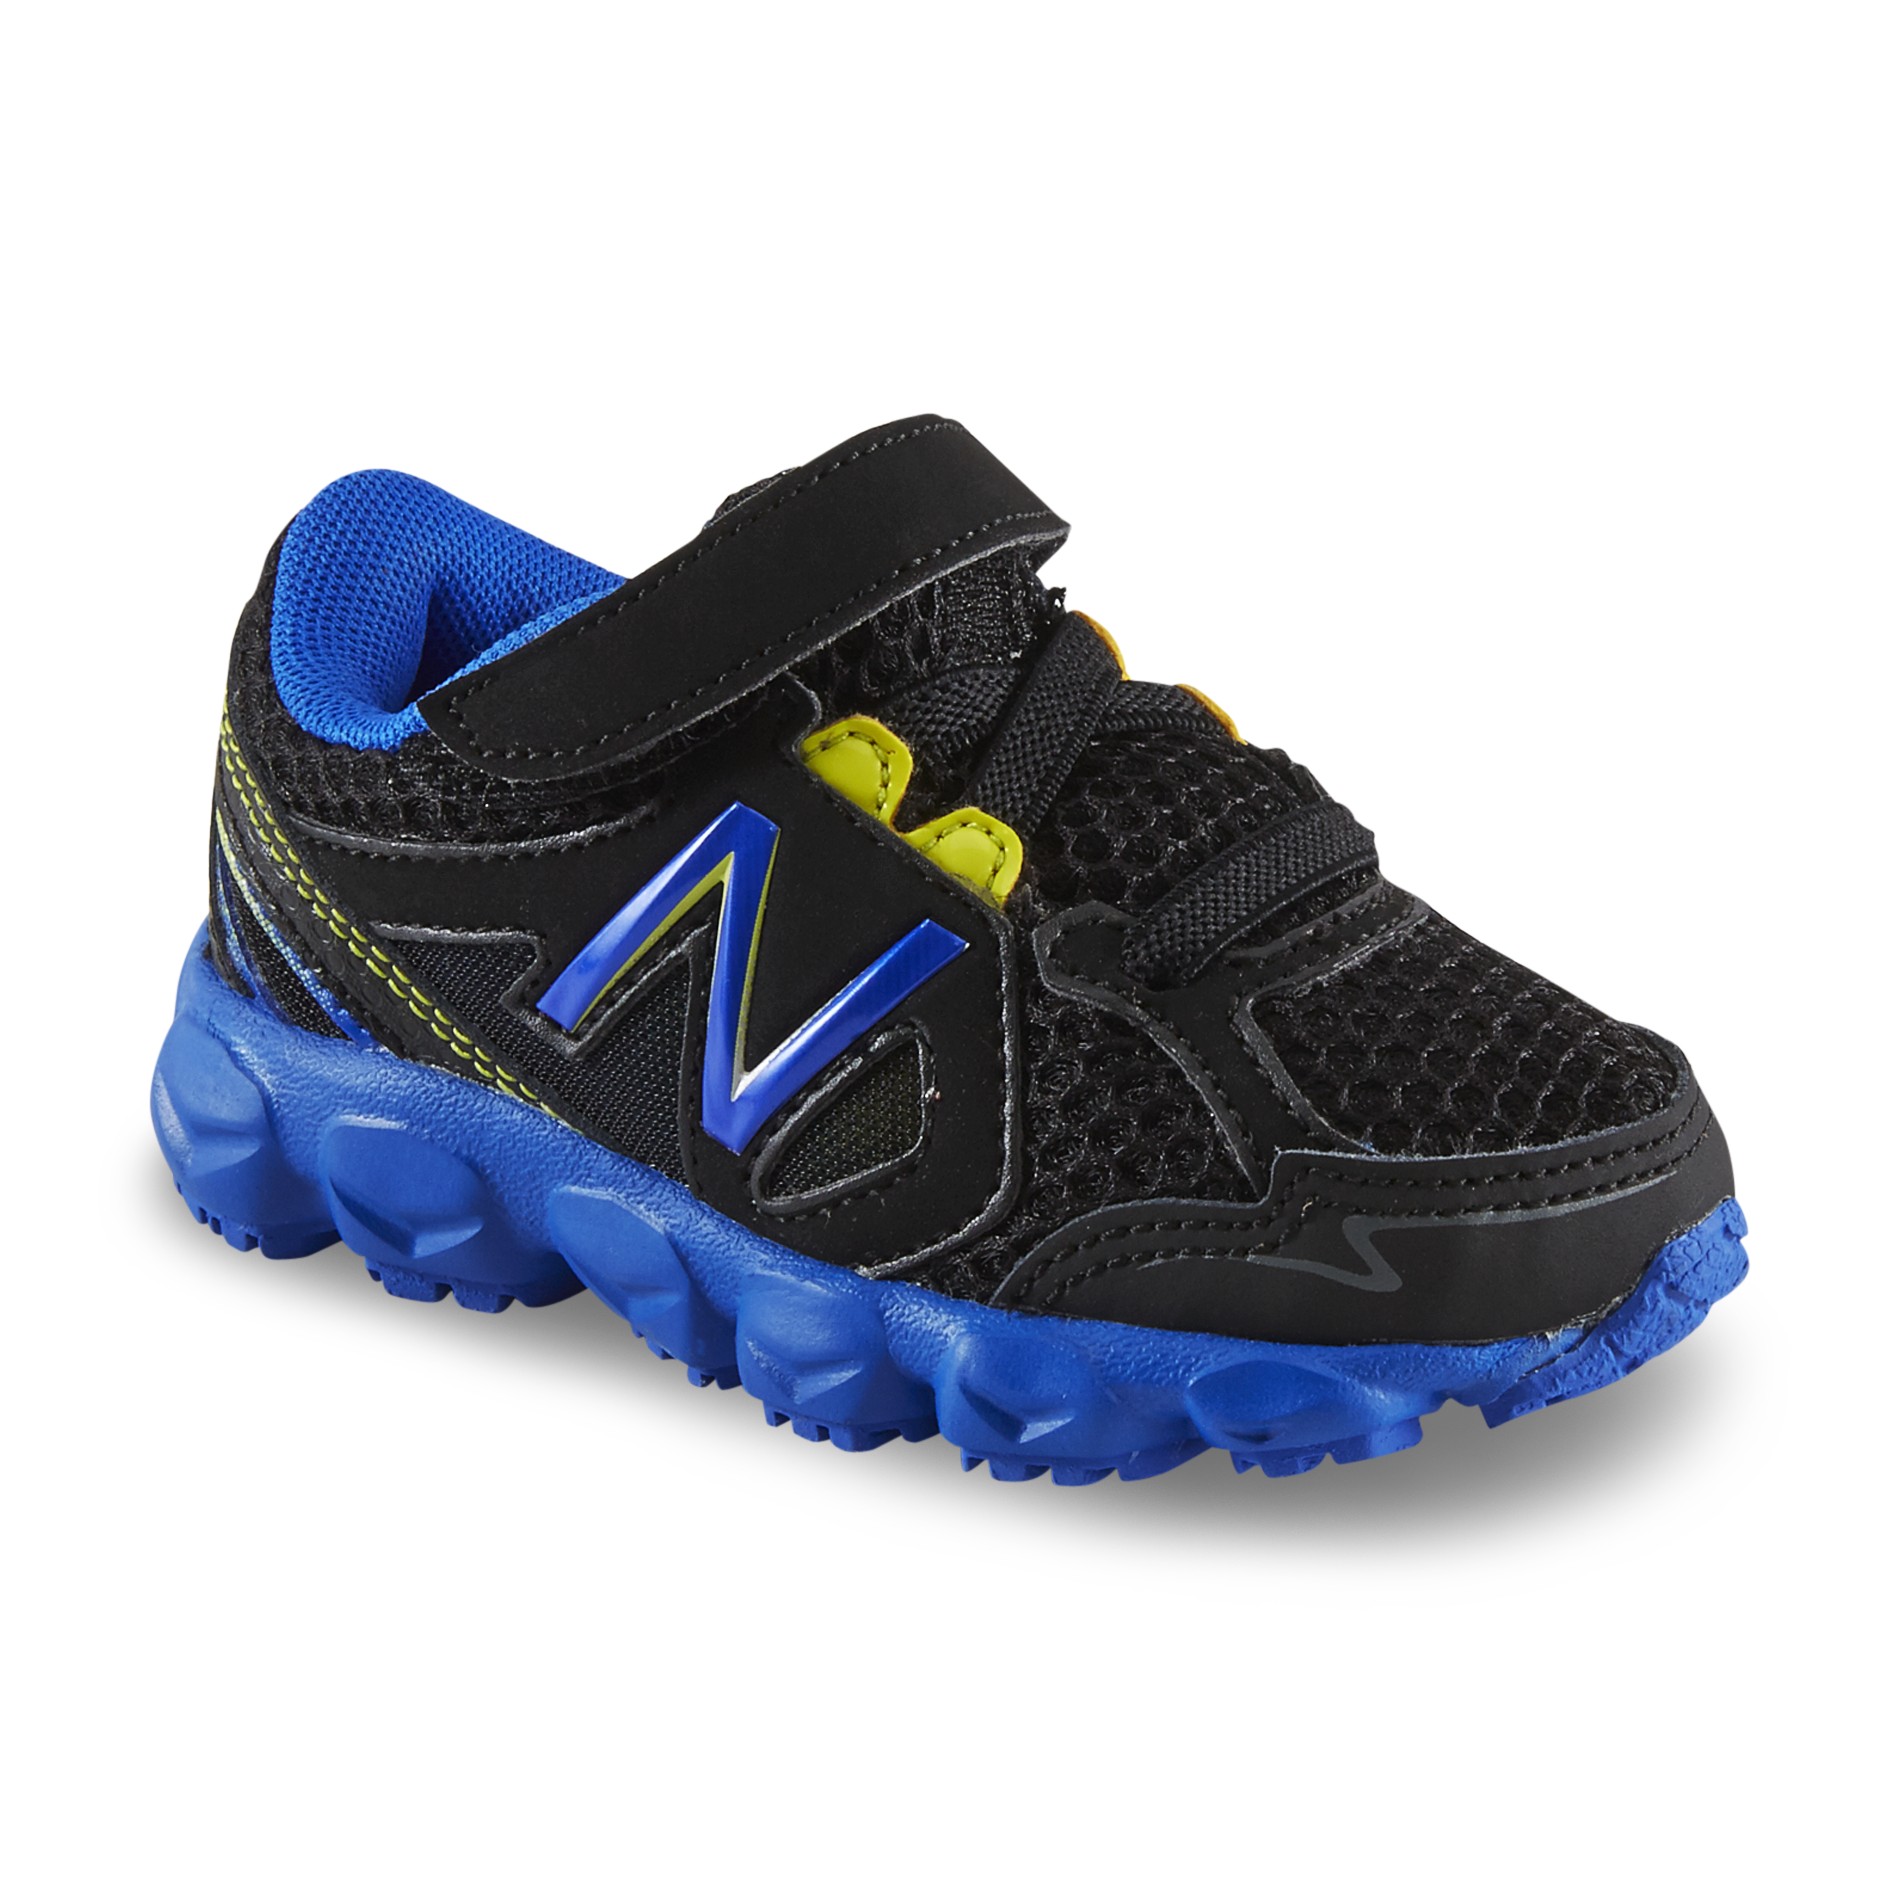 New Balance Toddler Boy's 750 Black/Blue Athletic Shoe